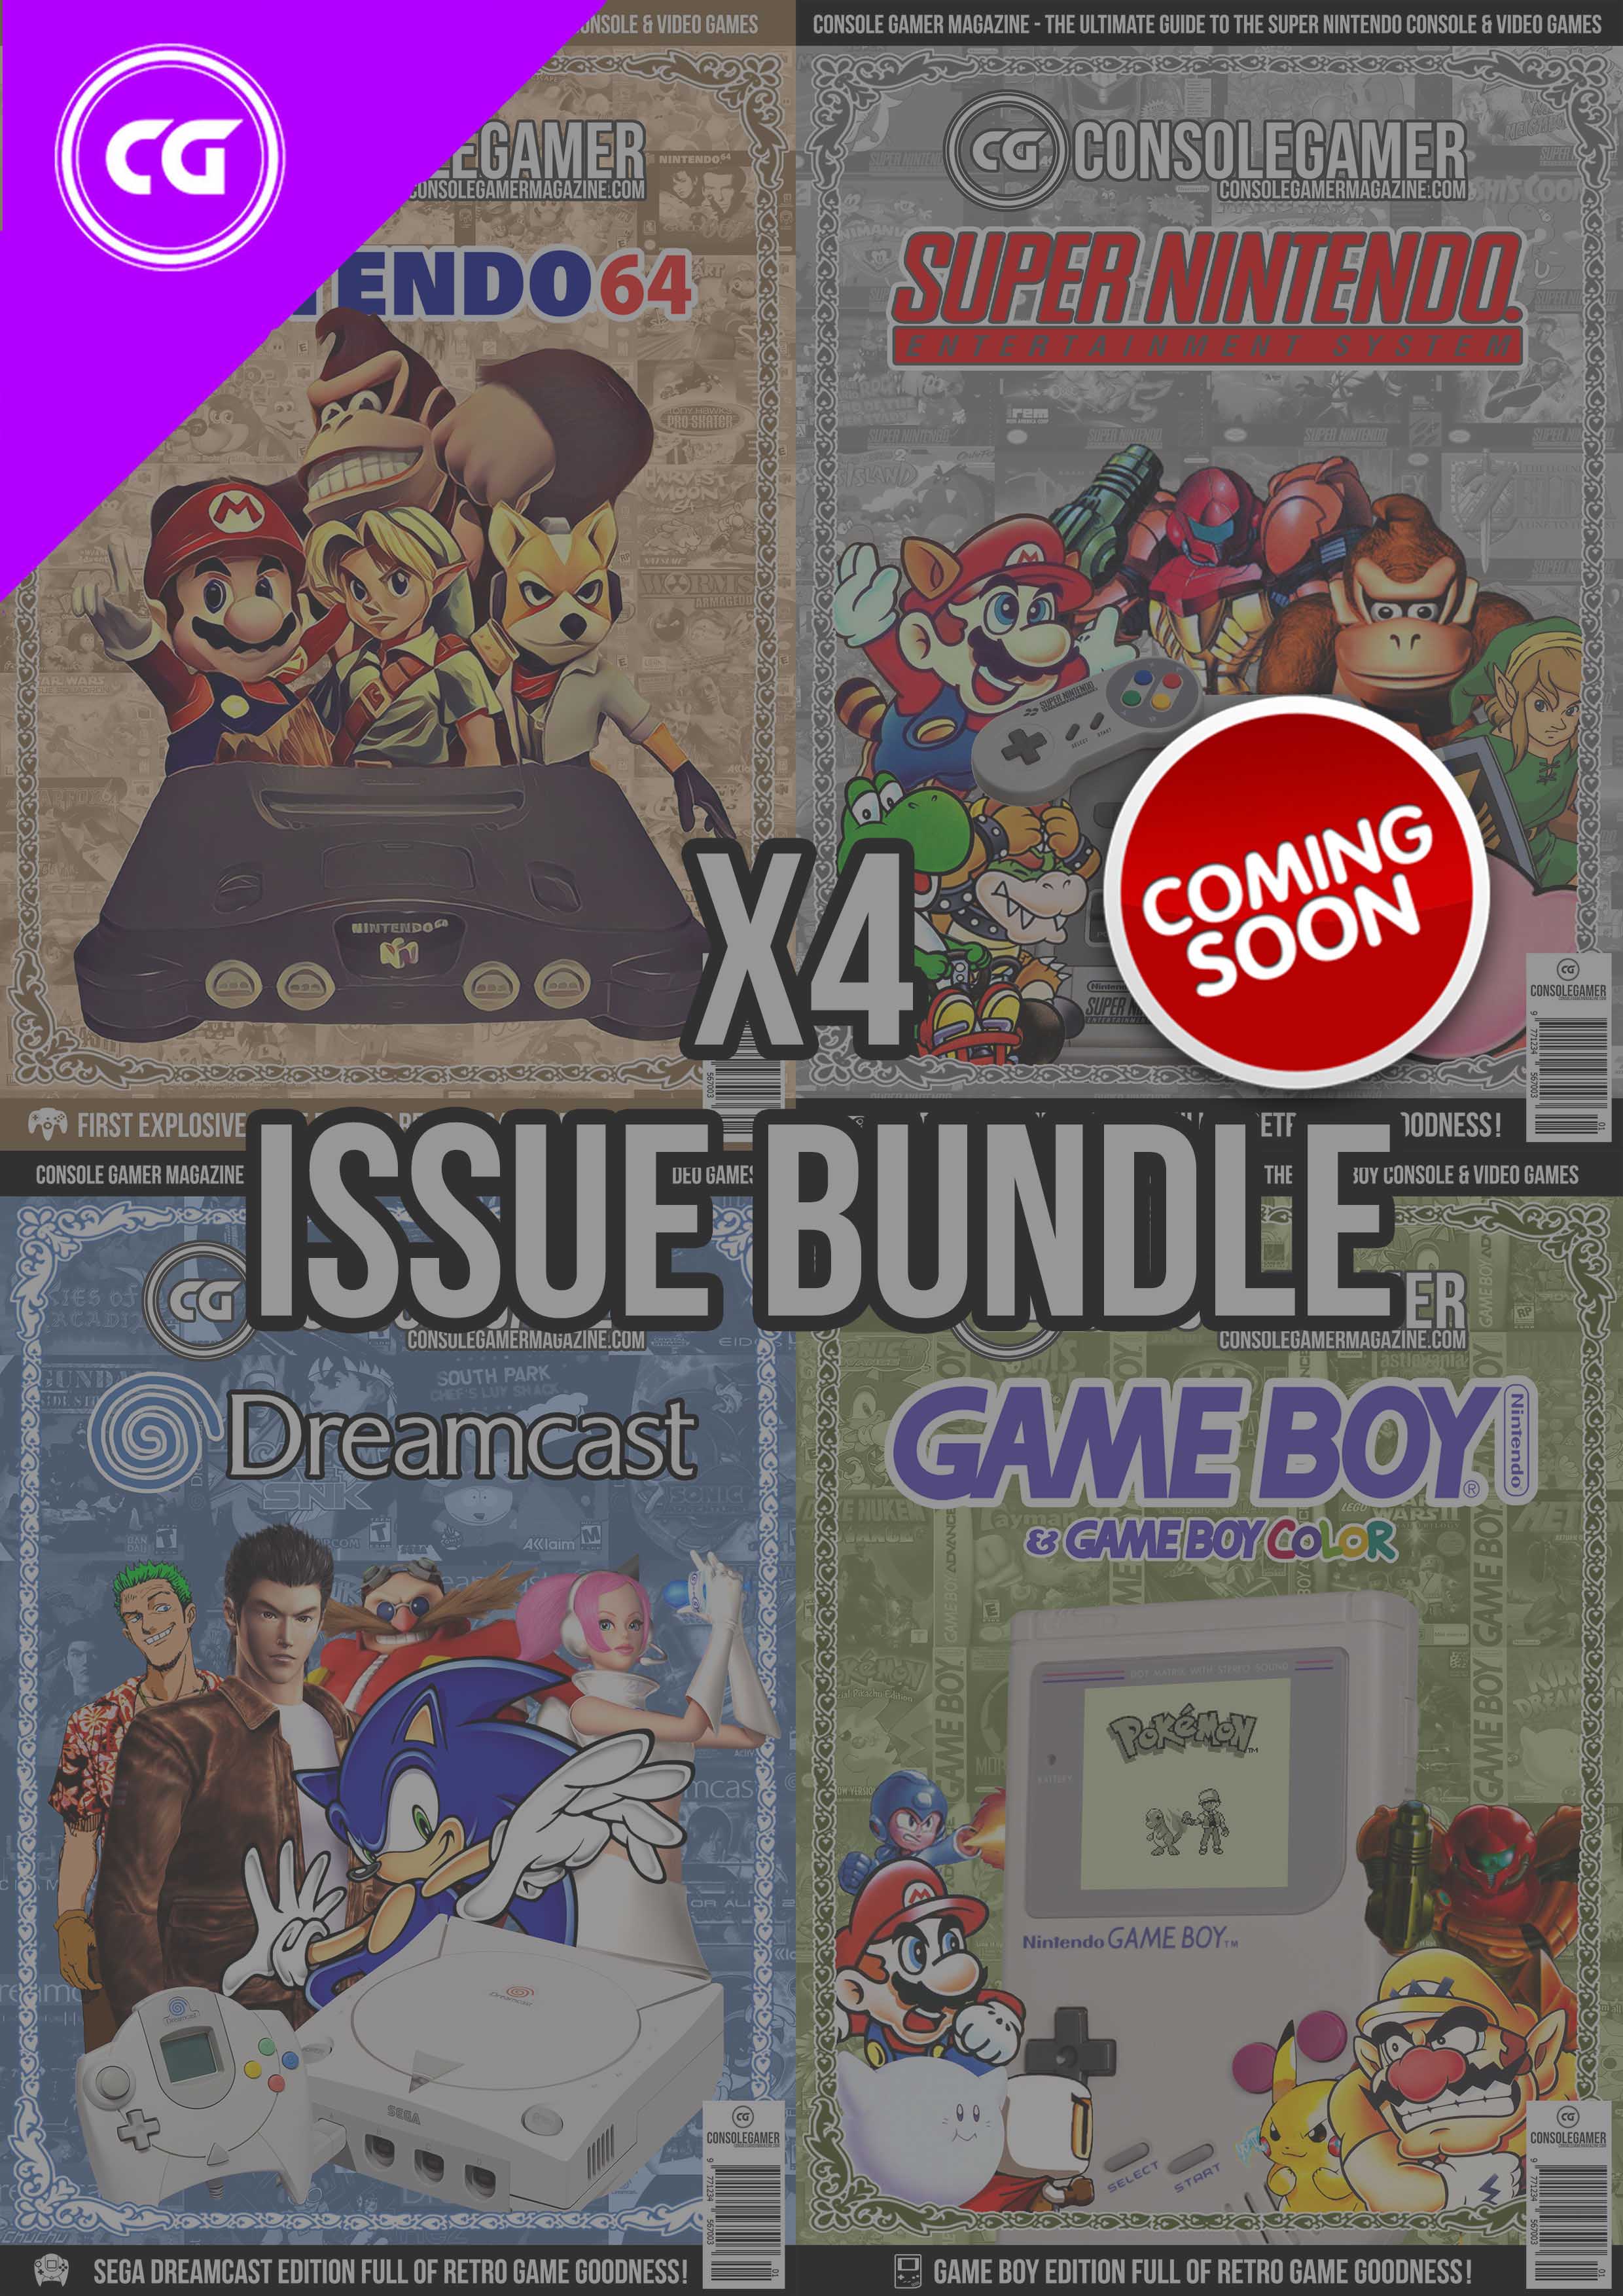 Console Gamer Magazine issue 01 nintendo 64 Purchase